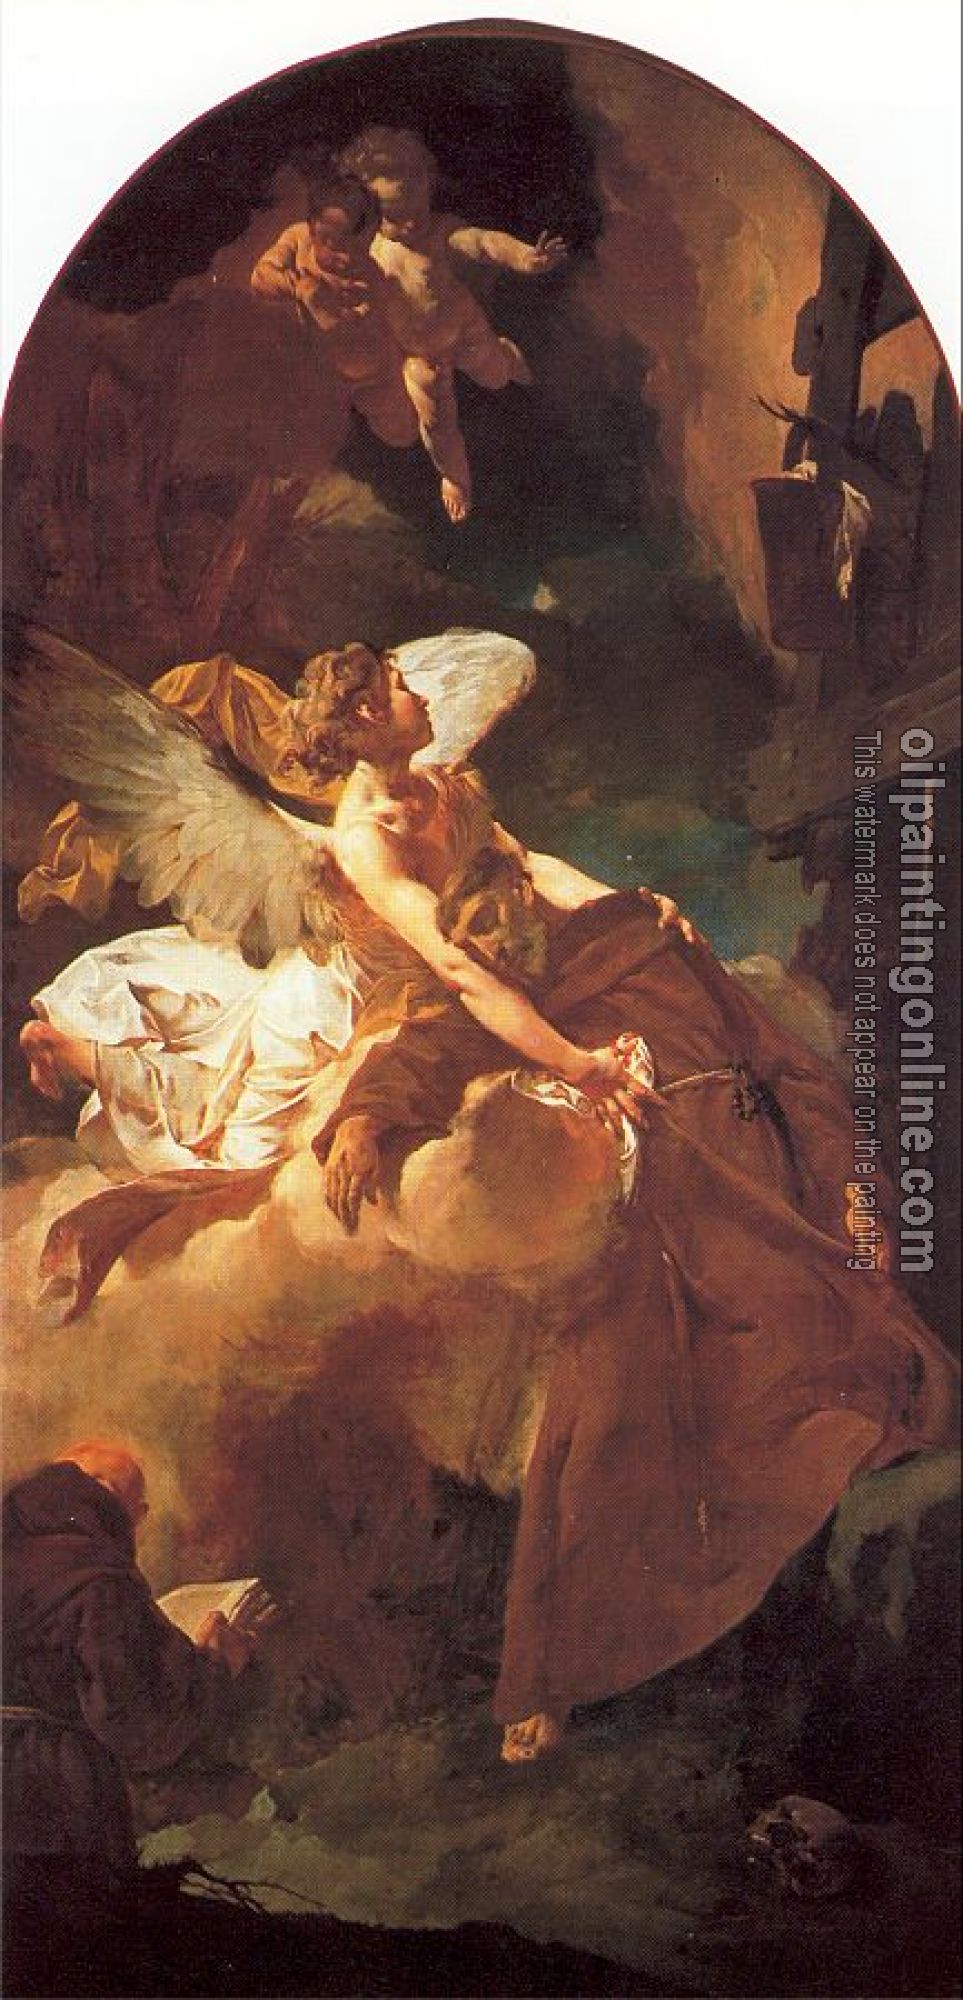 Piazzetta, Giovanni Battista - The Ecstasy of St. Francis